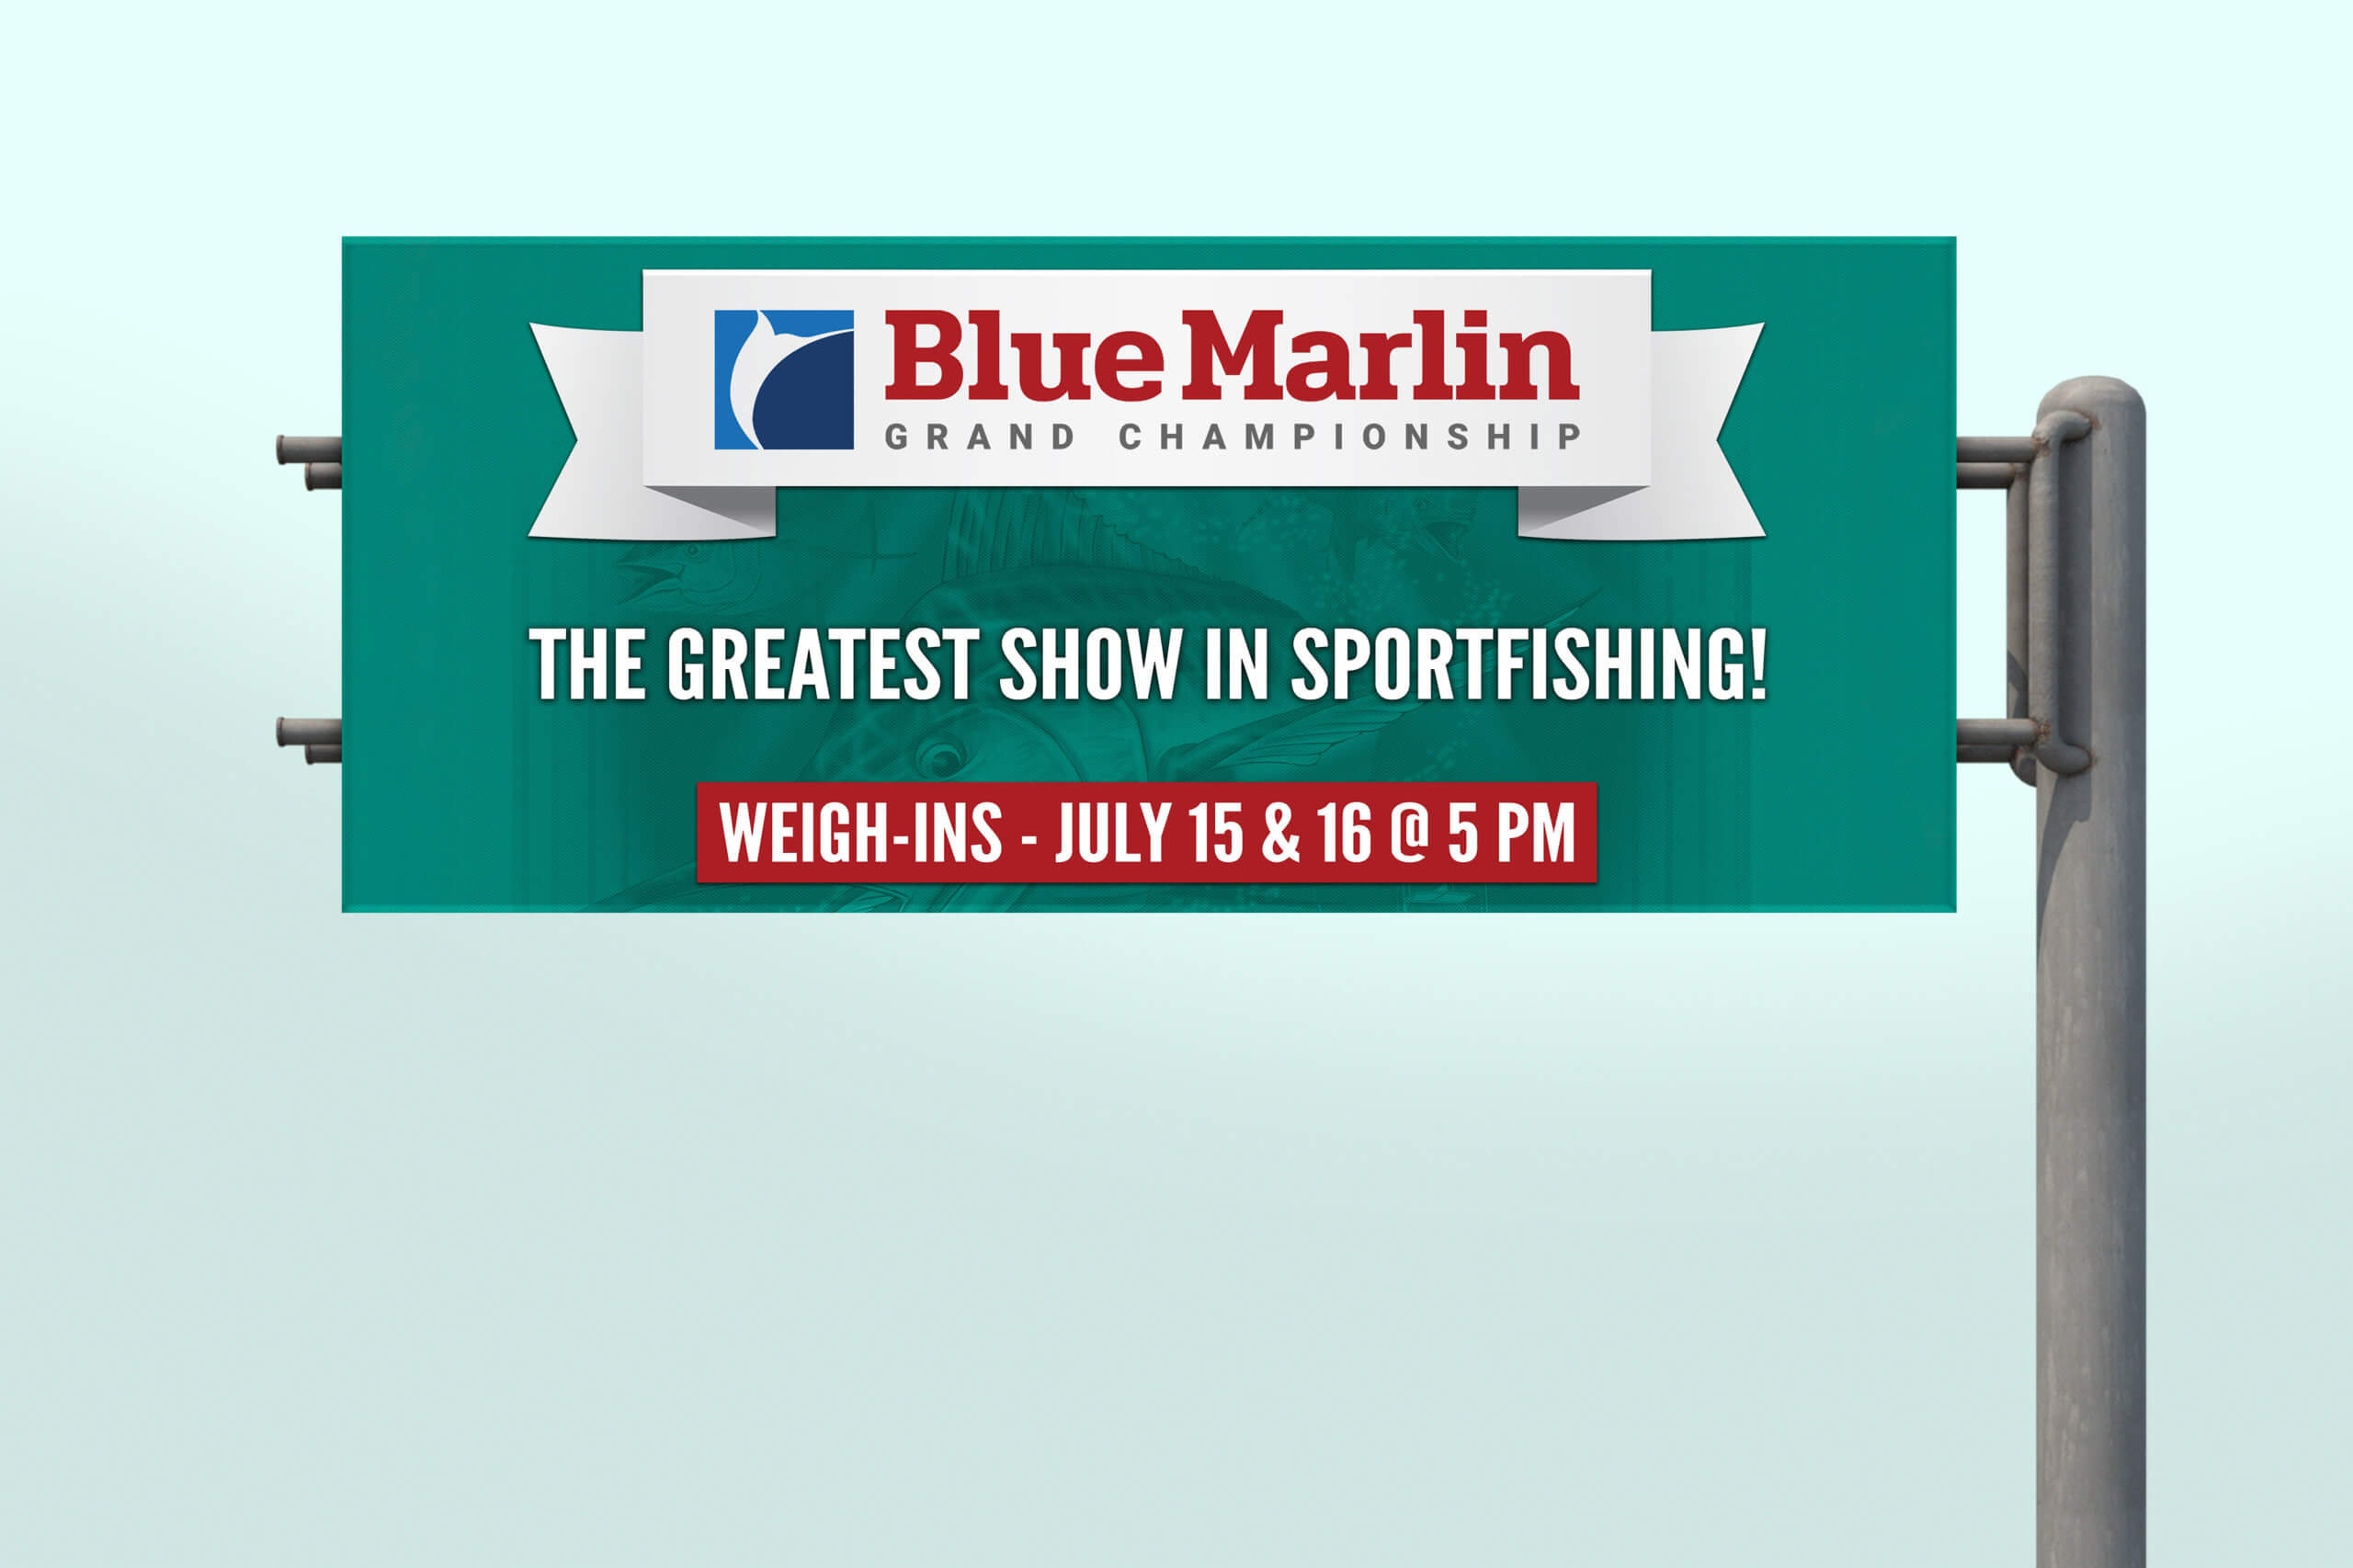 Blue Marlin Grand Championship Gallery Image